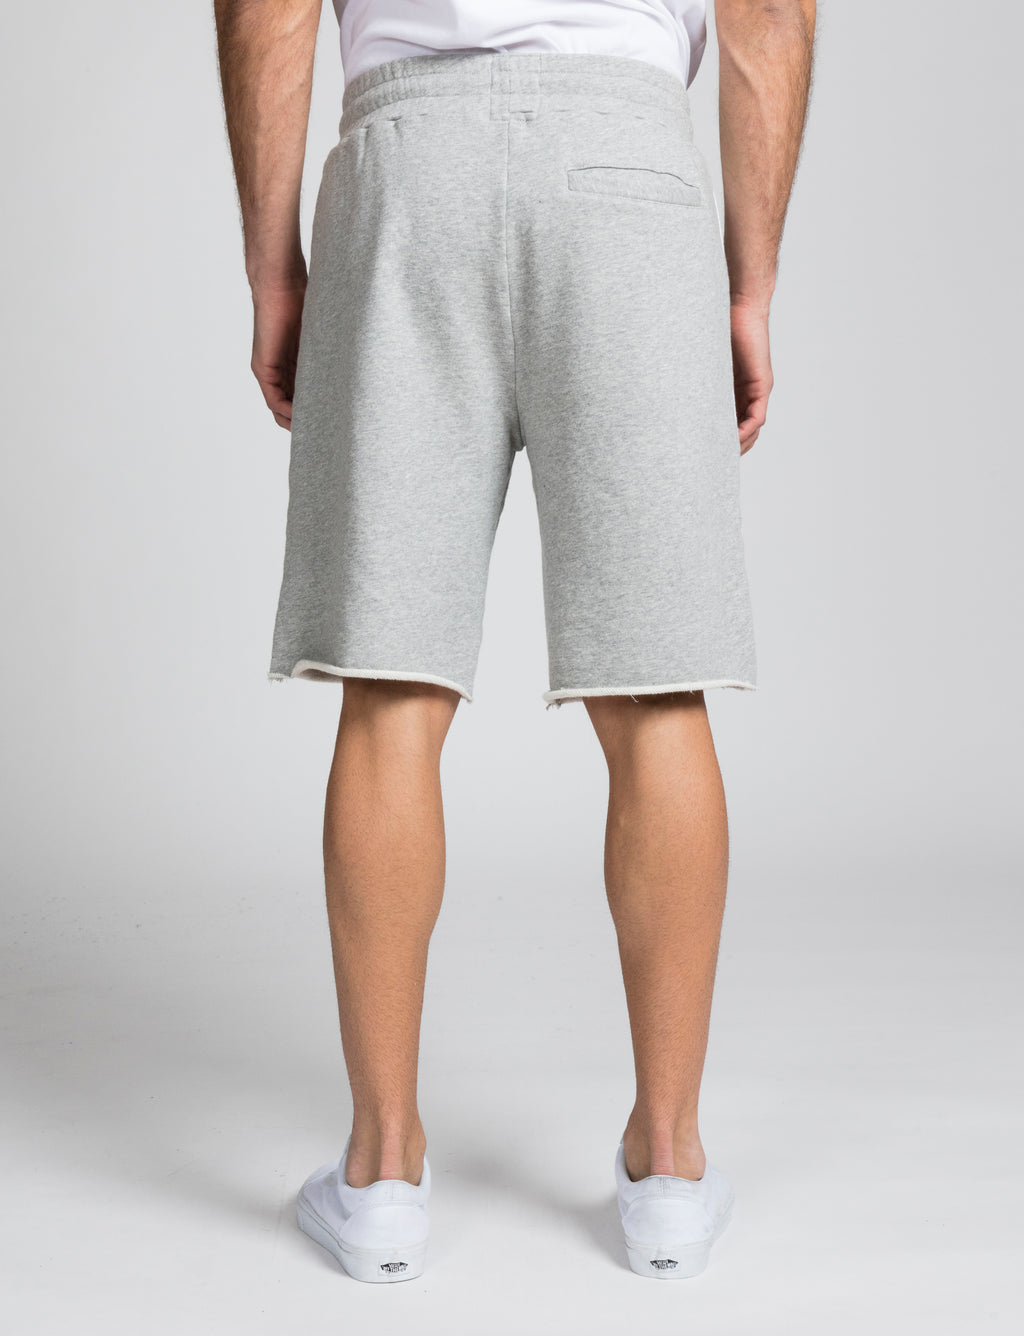 Men's Denim Shorts | Prps Jeans